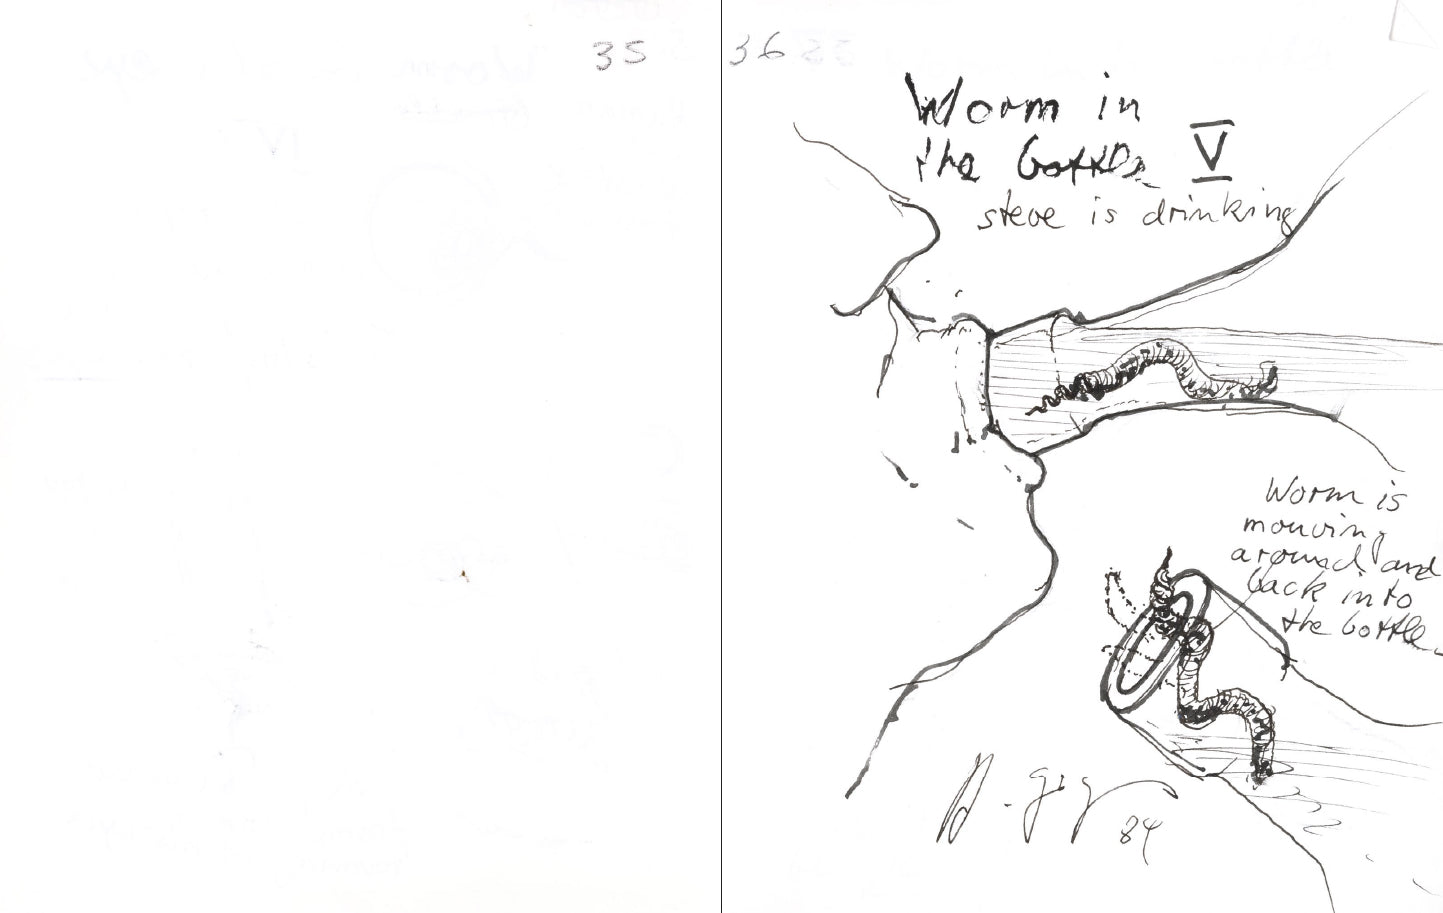 H. R. Giger - 5 – Poltergeist II: Drawings 1983–1985